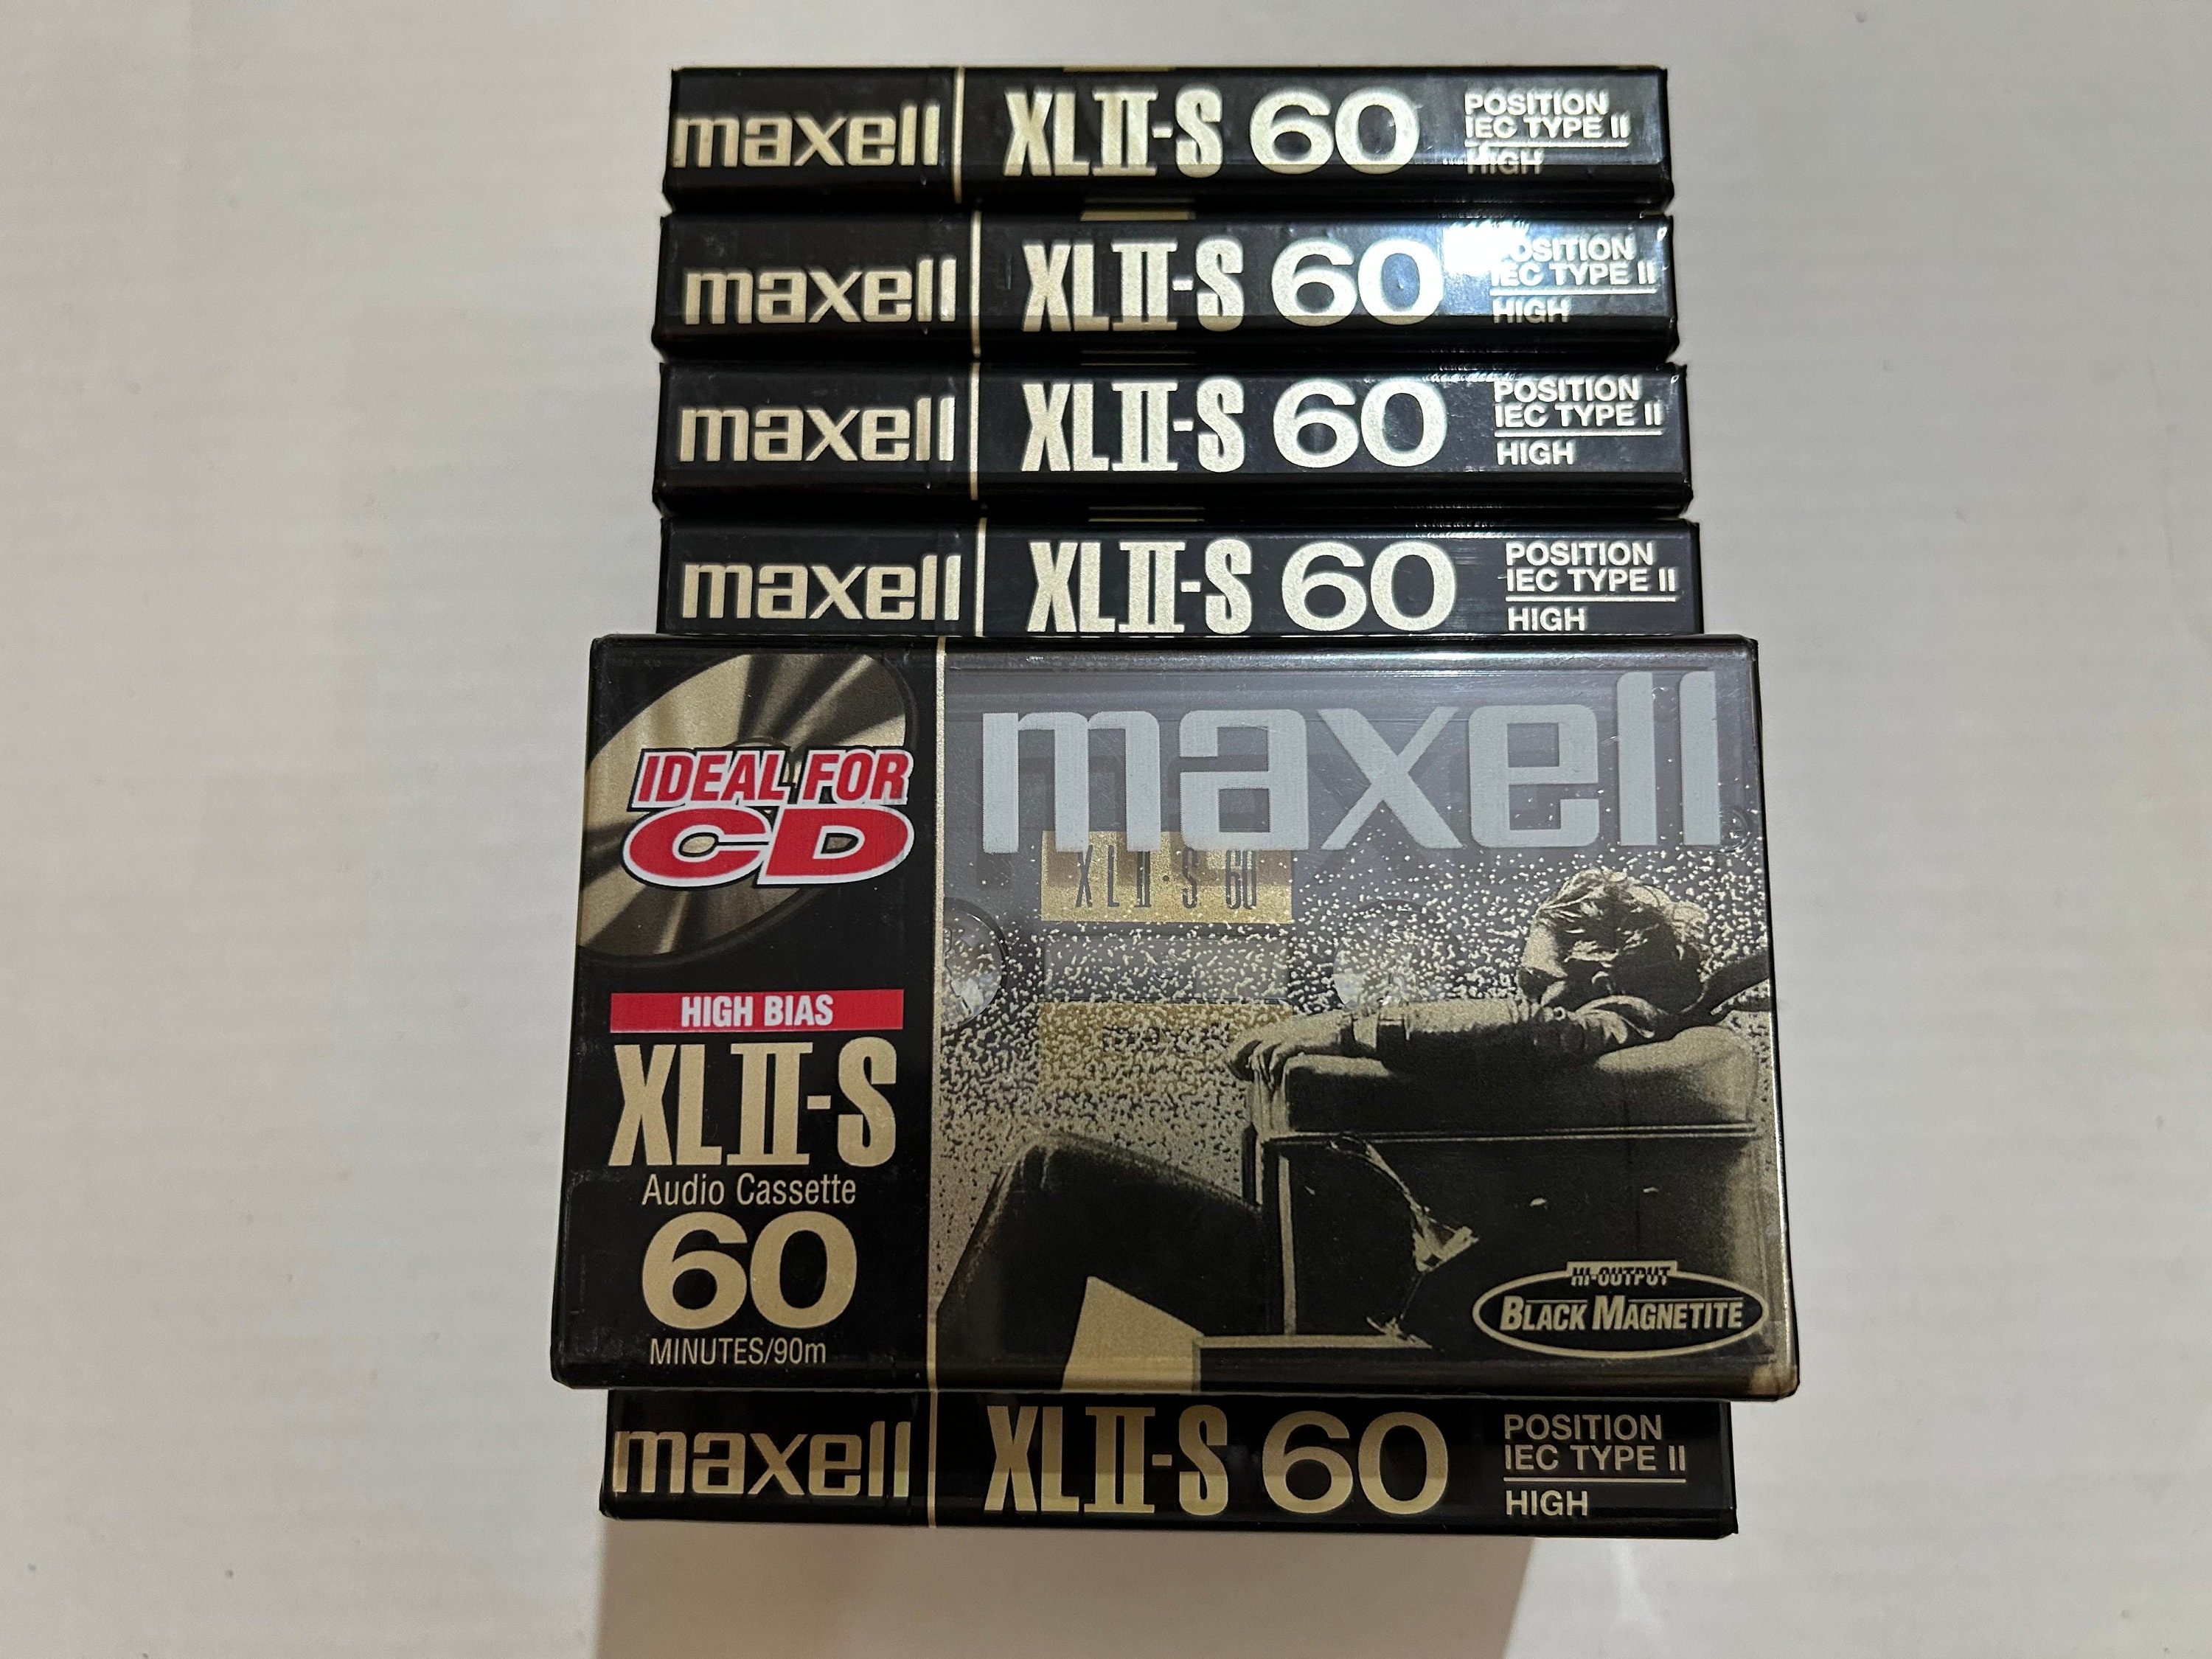 maxell XLⅡ-S 90 high position